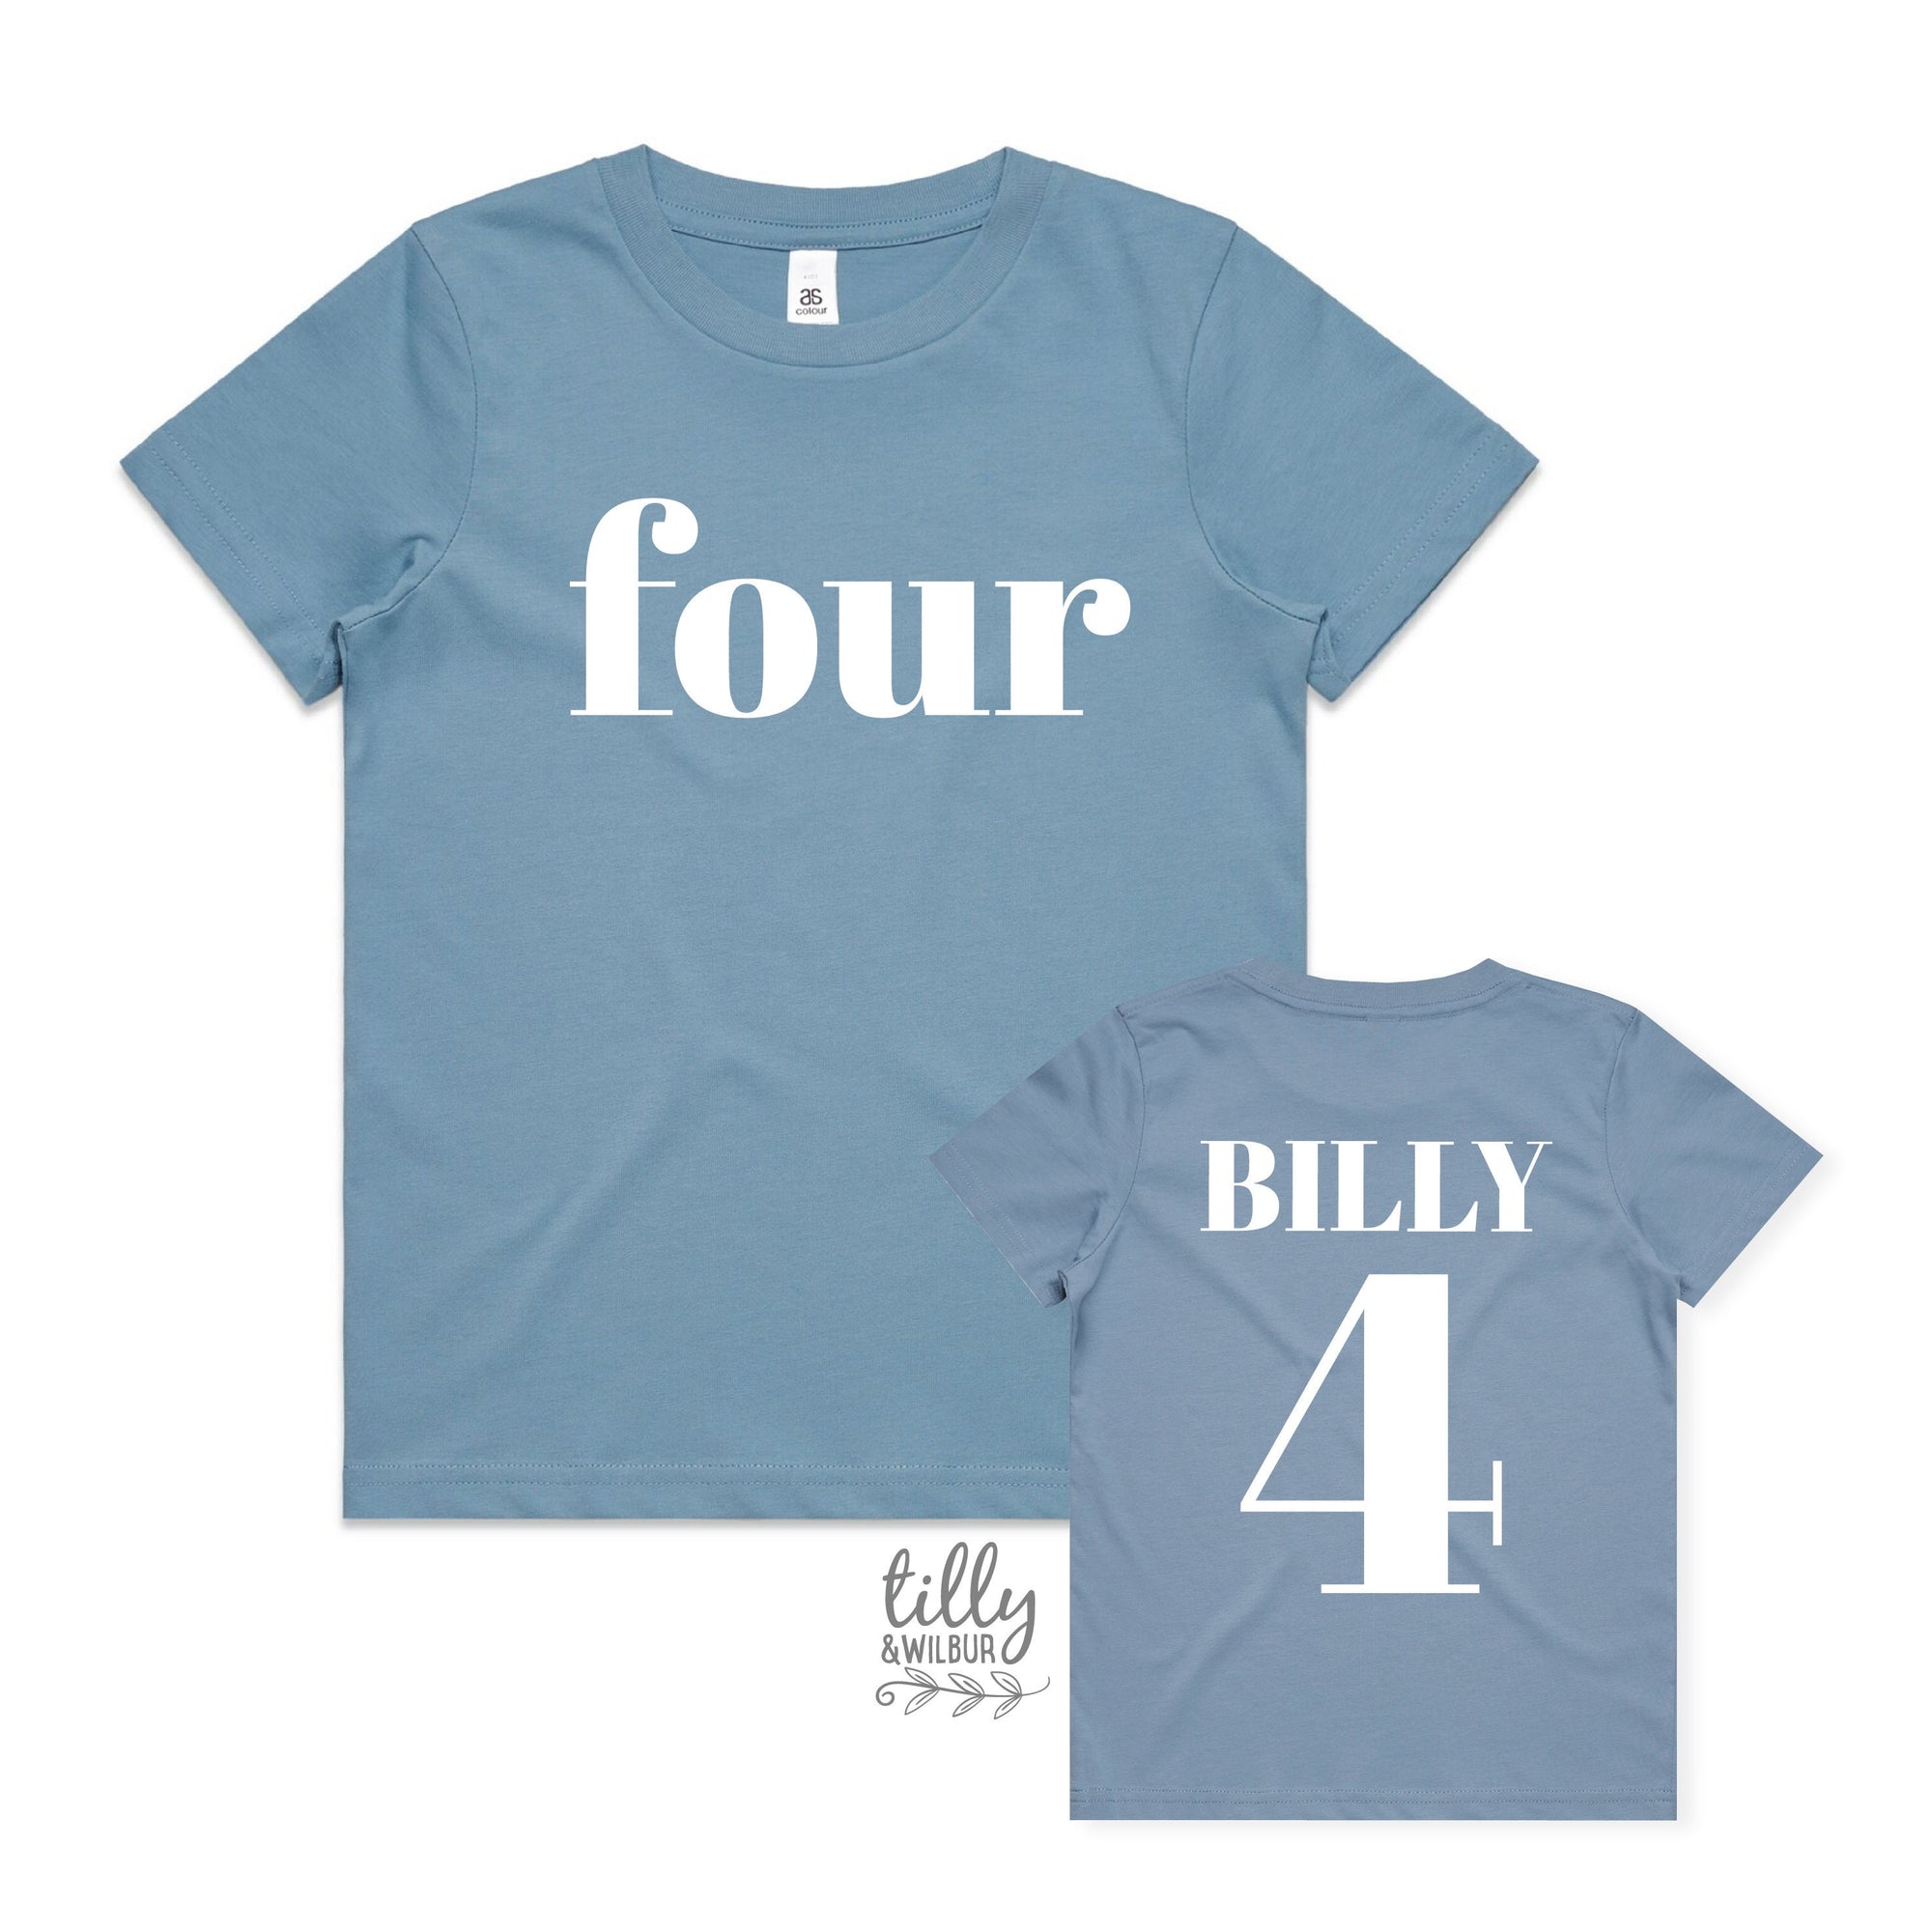 4th Birthday T-Shirt, Personalised 4th Birthday T-Shirt, Boys 4th Birthday, Birthday Boy Tee, Boy's 4th Birthday Gift, 4 Bday Party T-Shirt